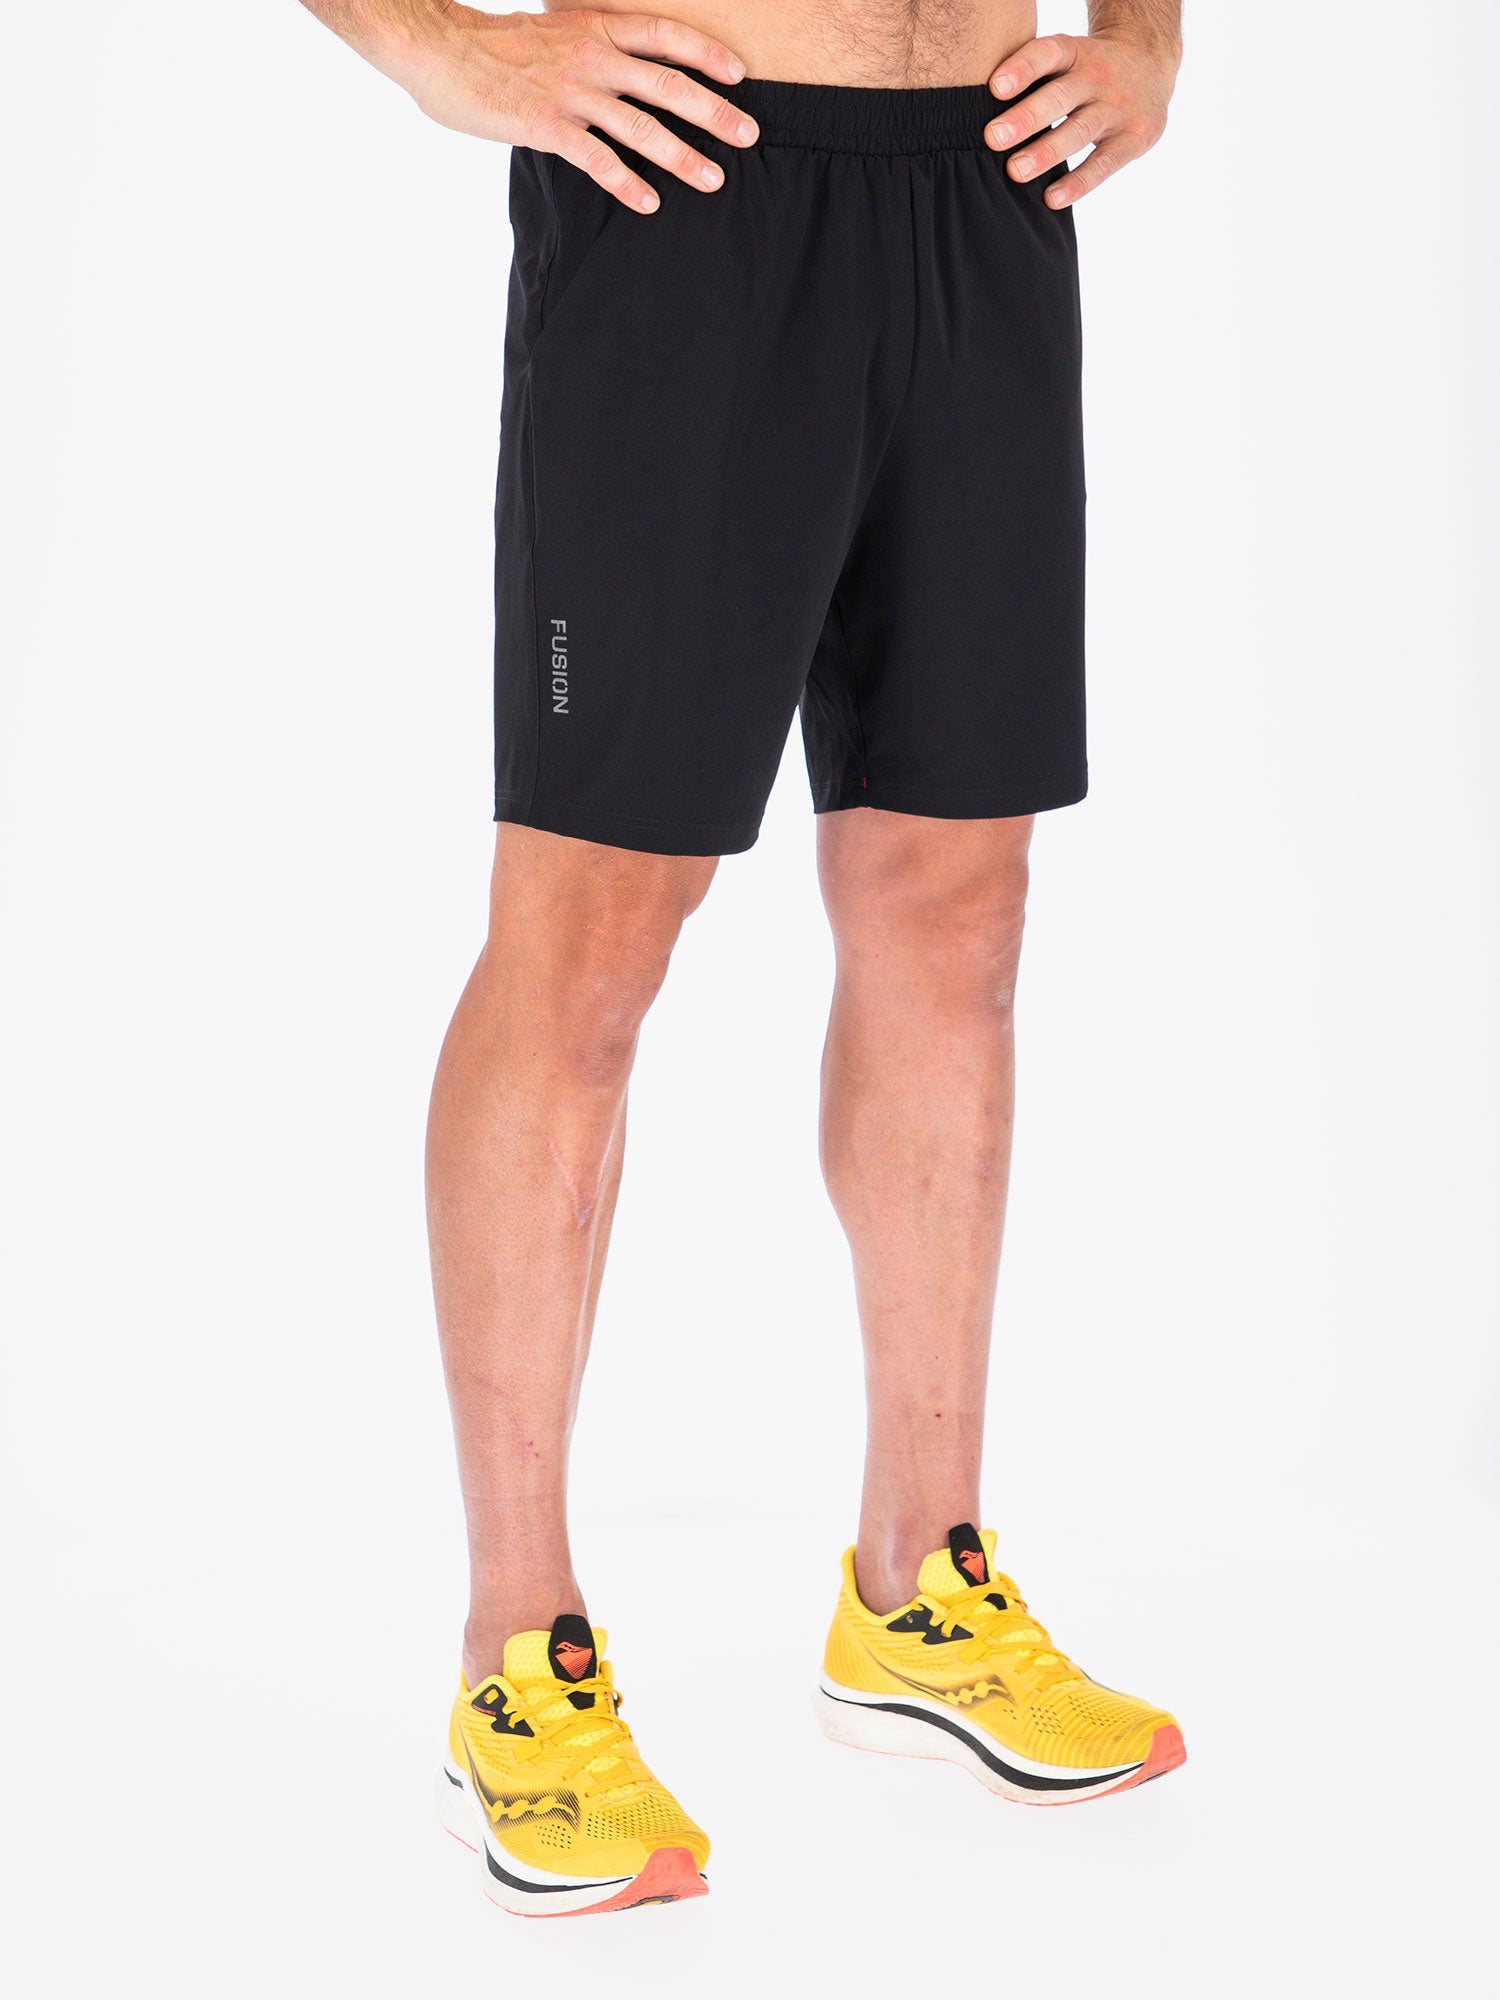 C3 Run Shorts - Ultralight and stretchy running shorts